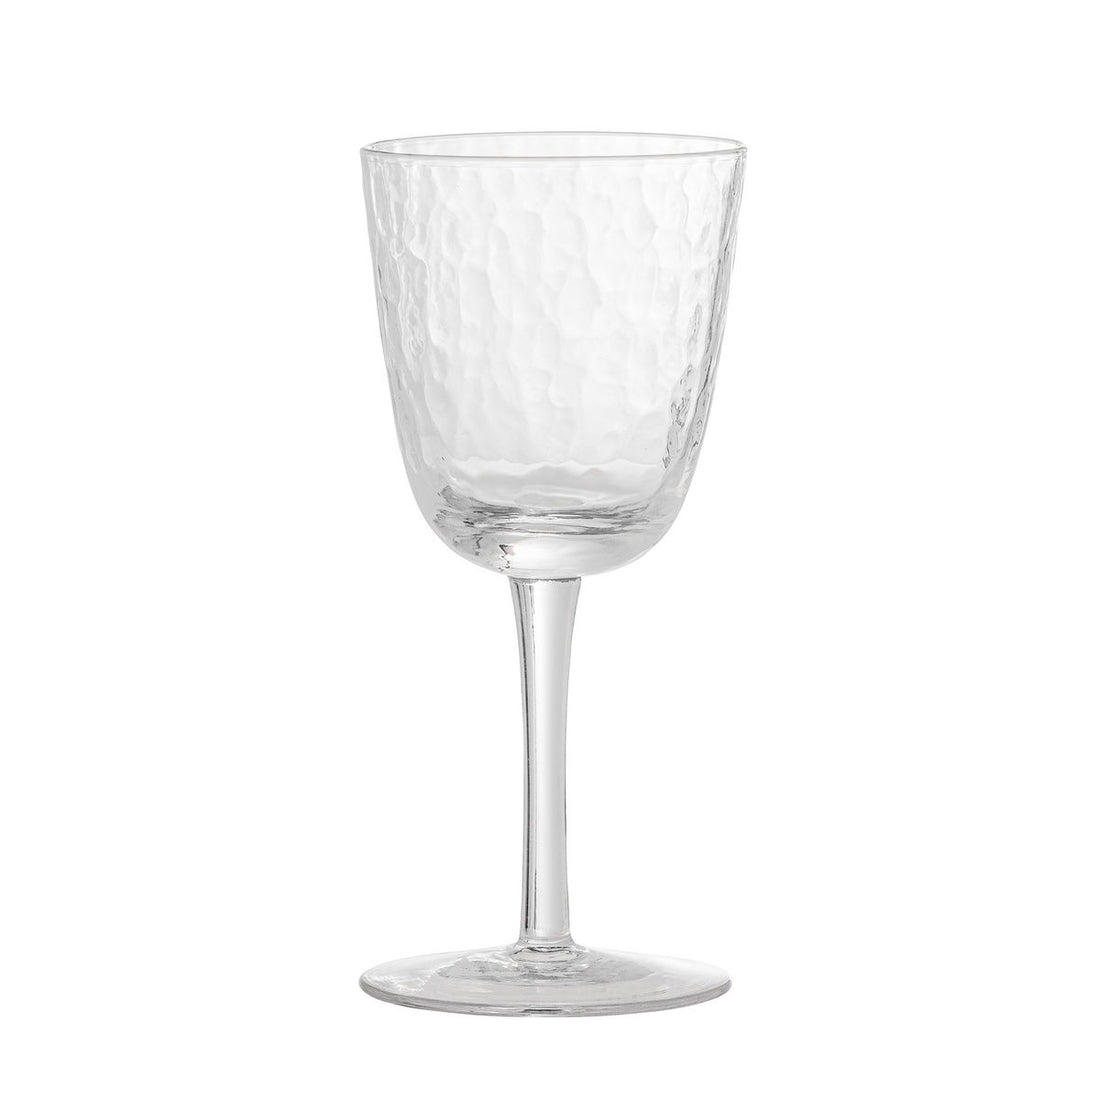 Bloomingville Asali wine glass, clear, glass